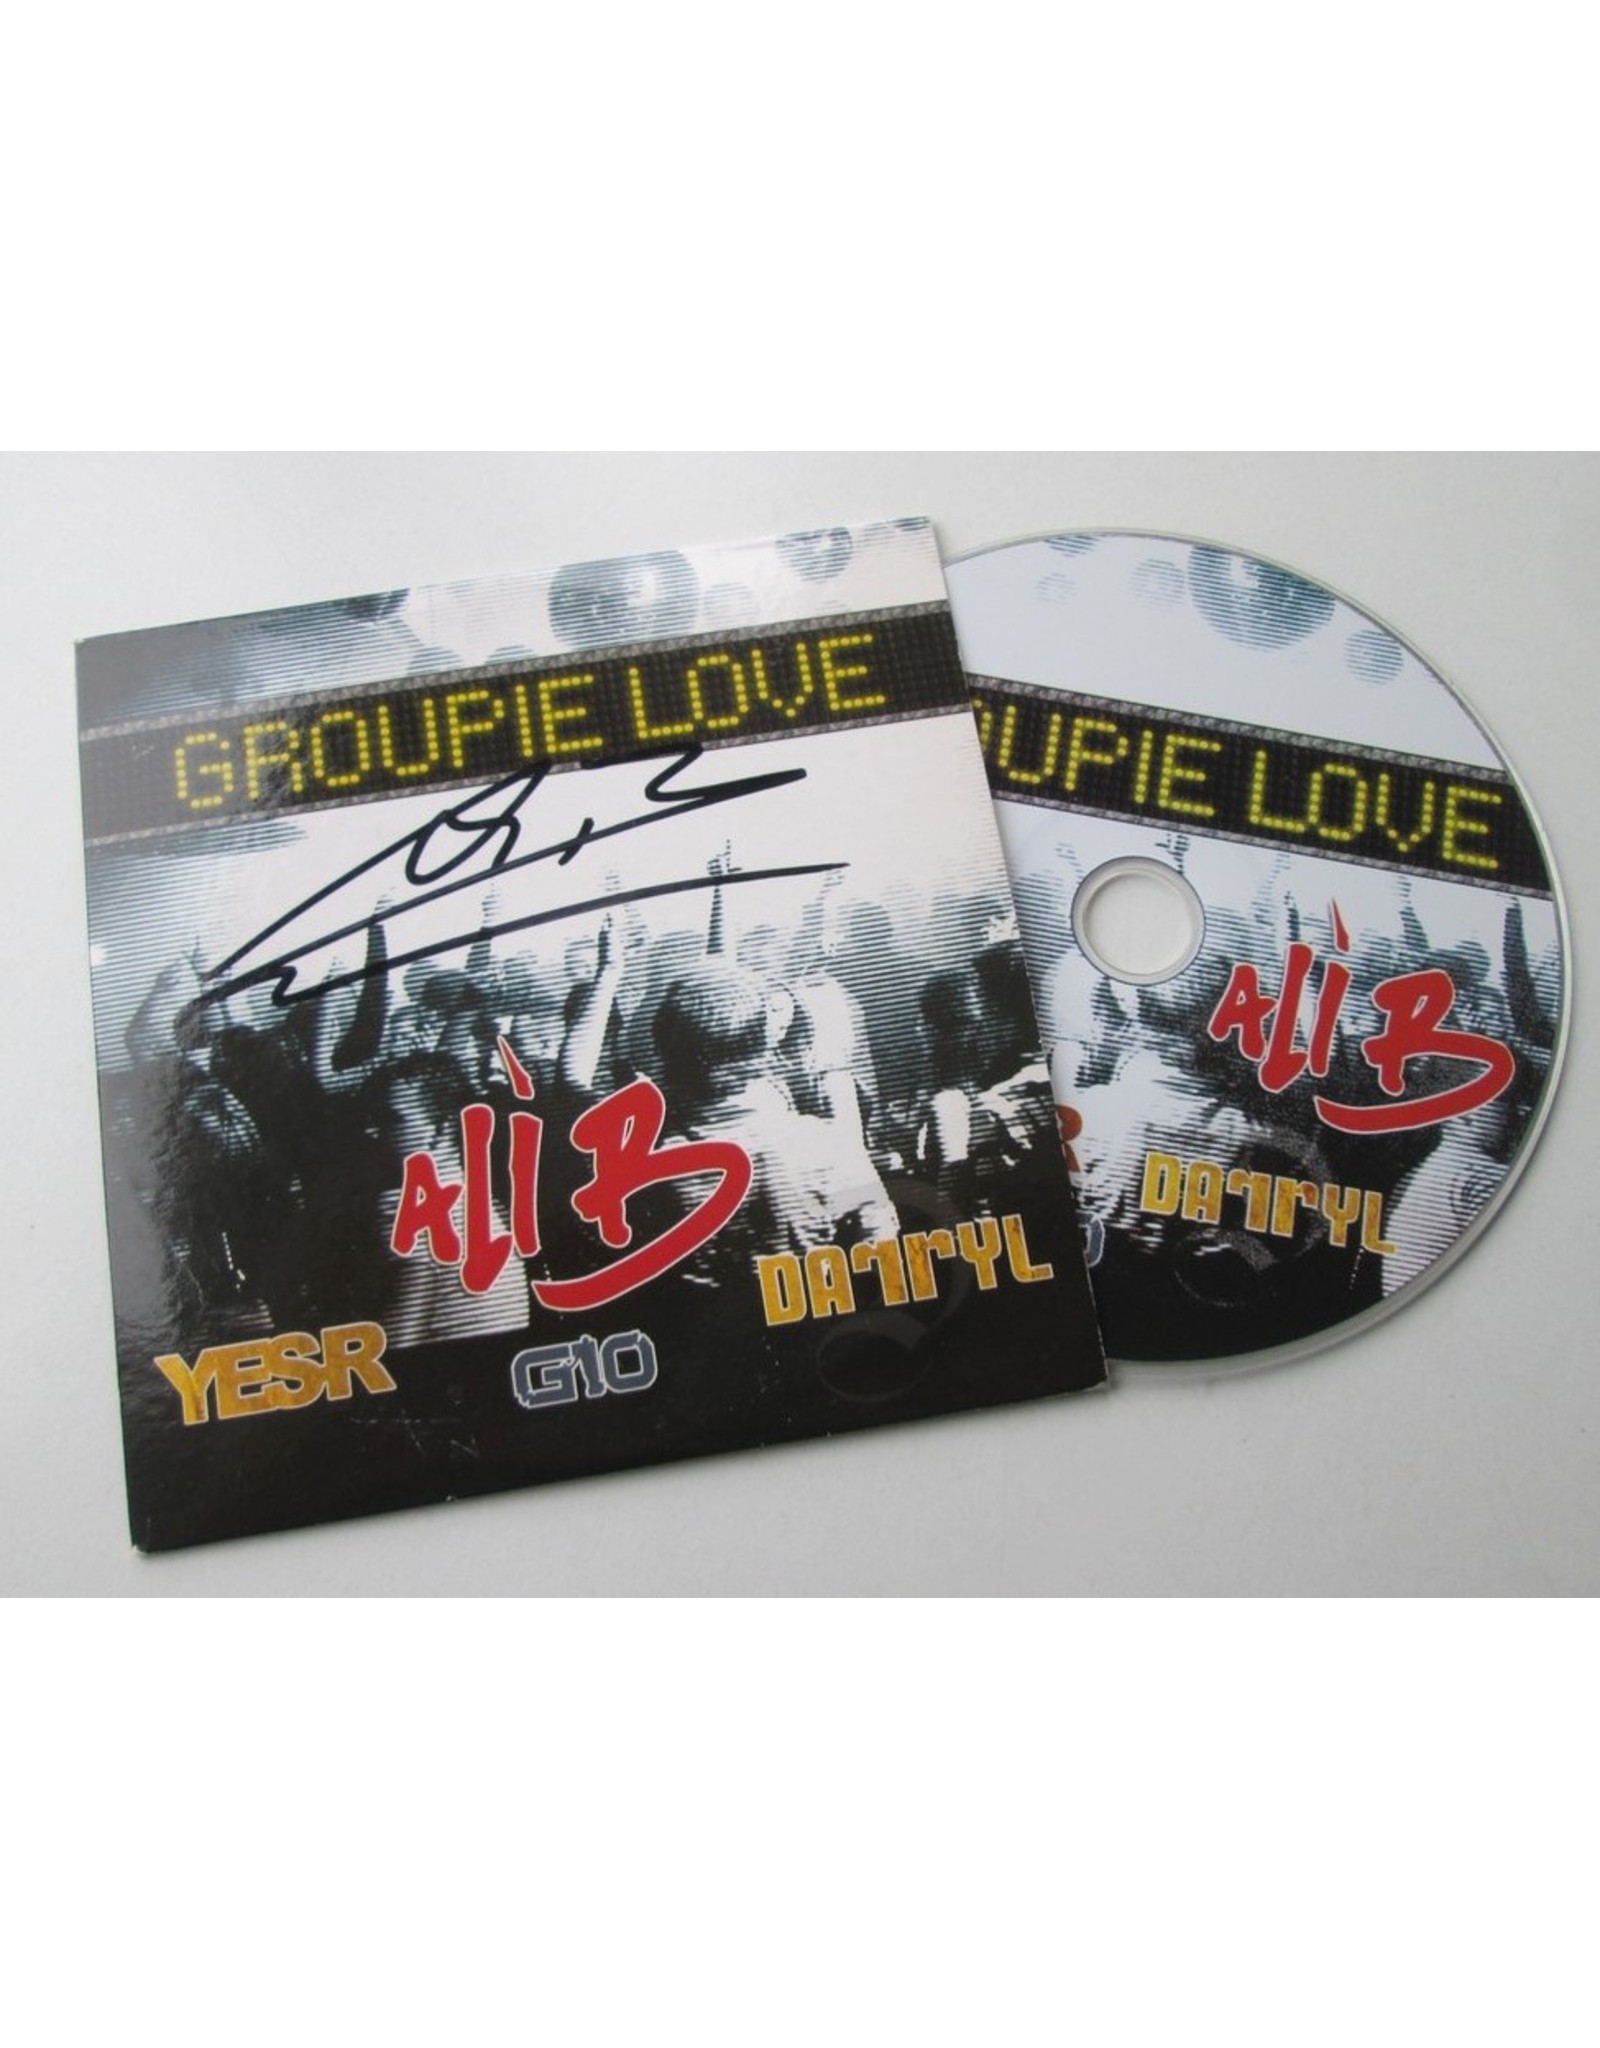 Ali B ft Yes-R, Gio & Darryl - Groupie Love